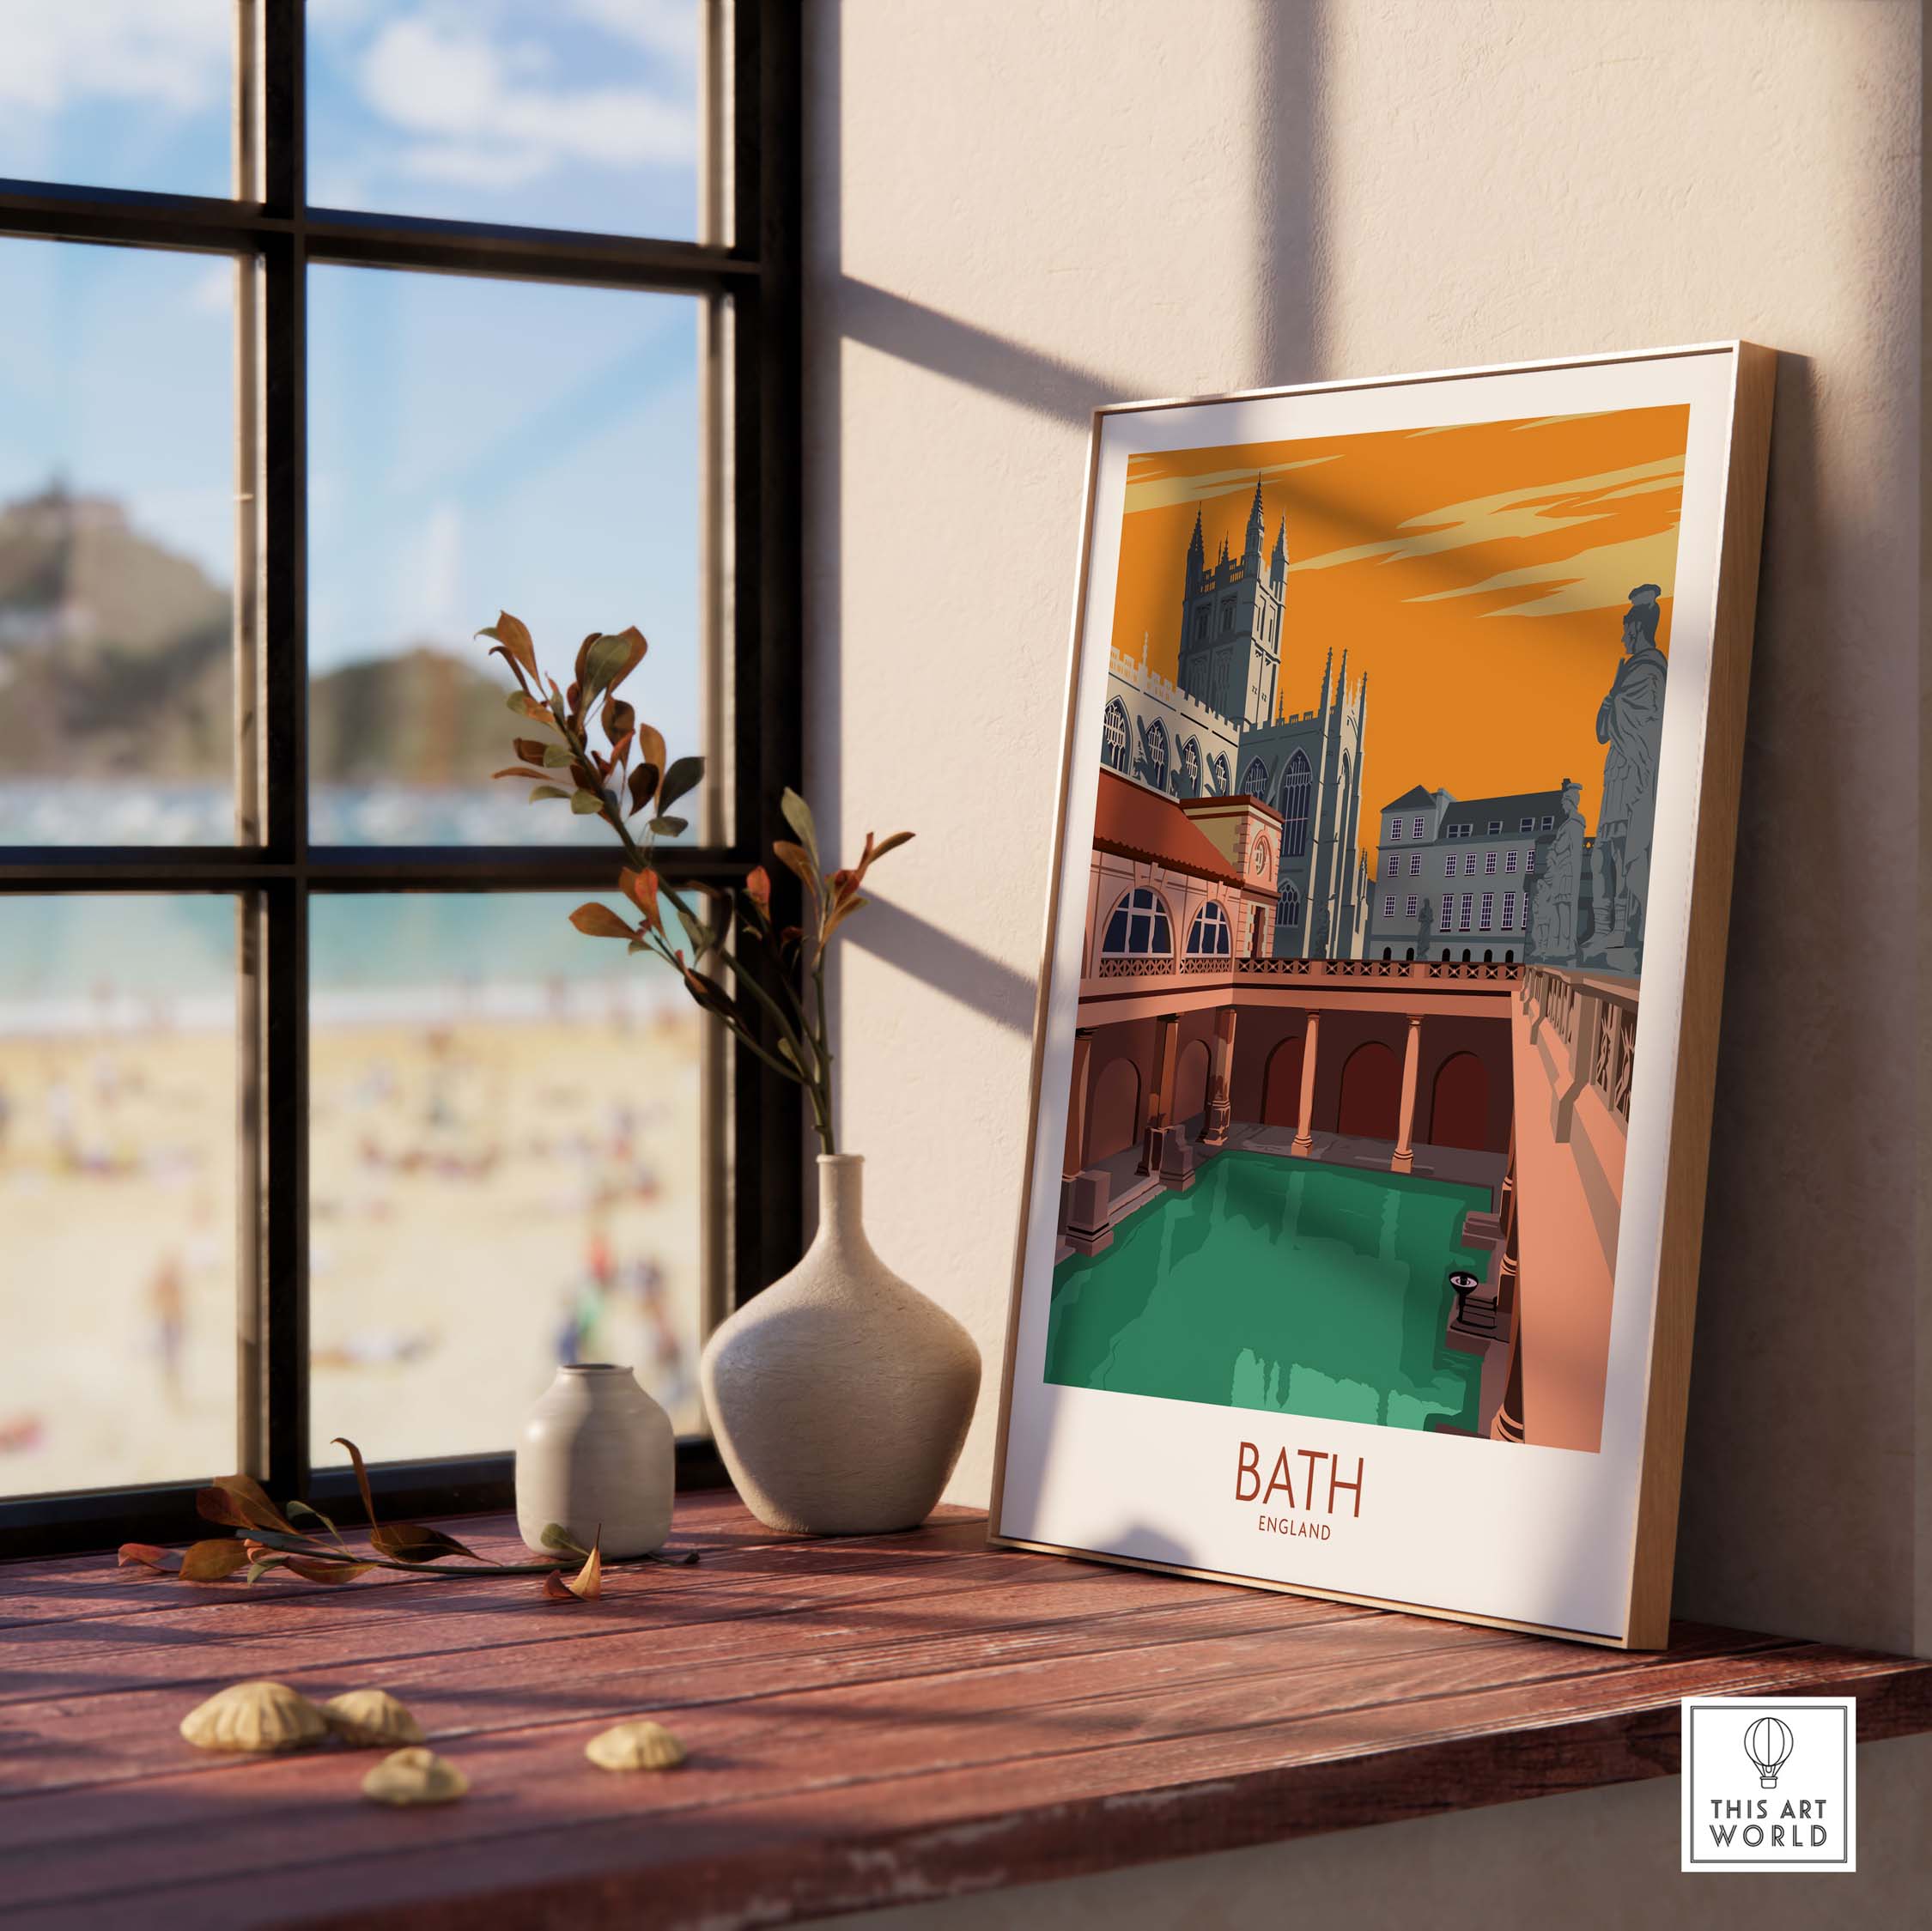 bath poster | england travel print